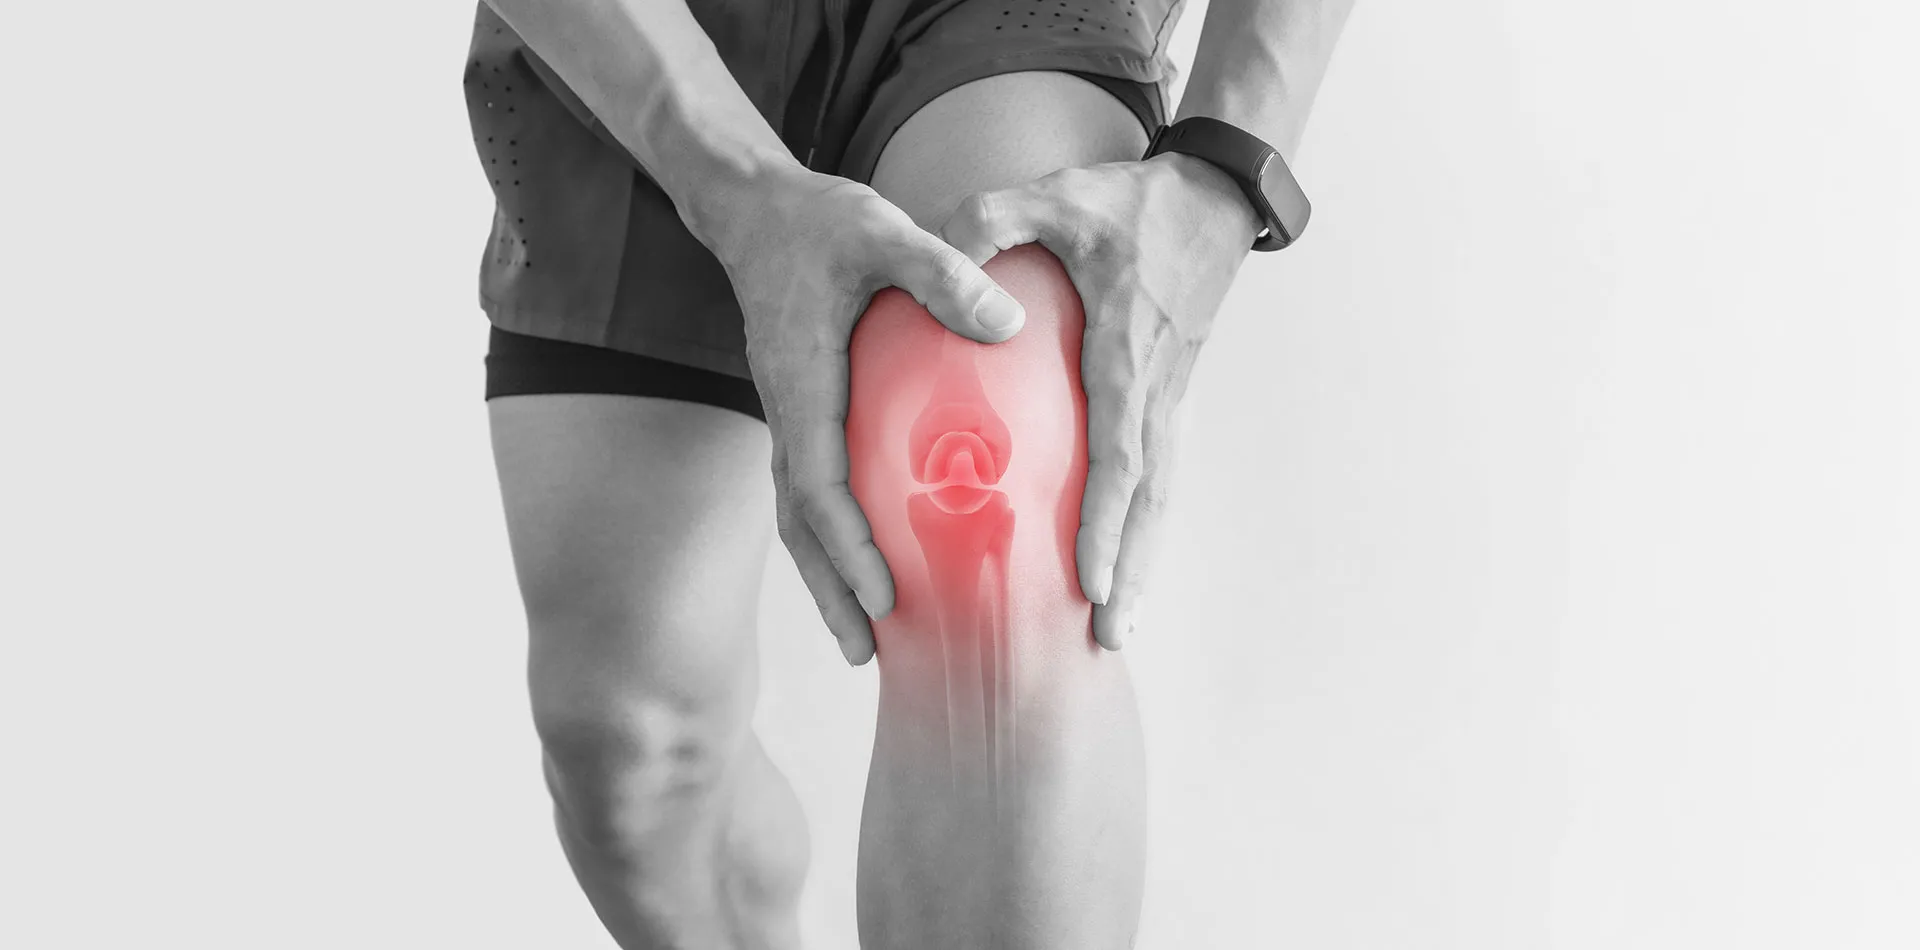 Meniscus Tear Treatment Options - Knee Pain Explained